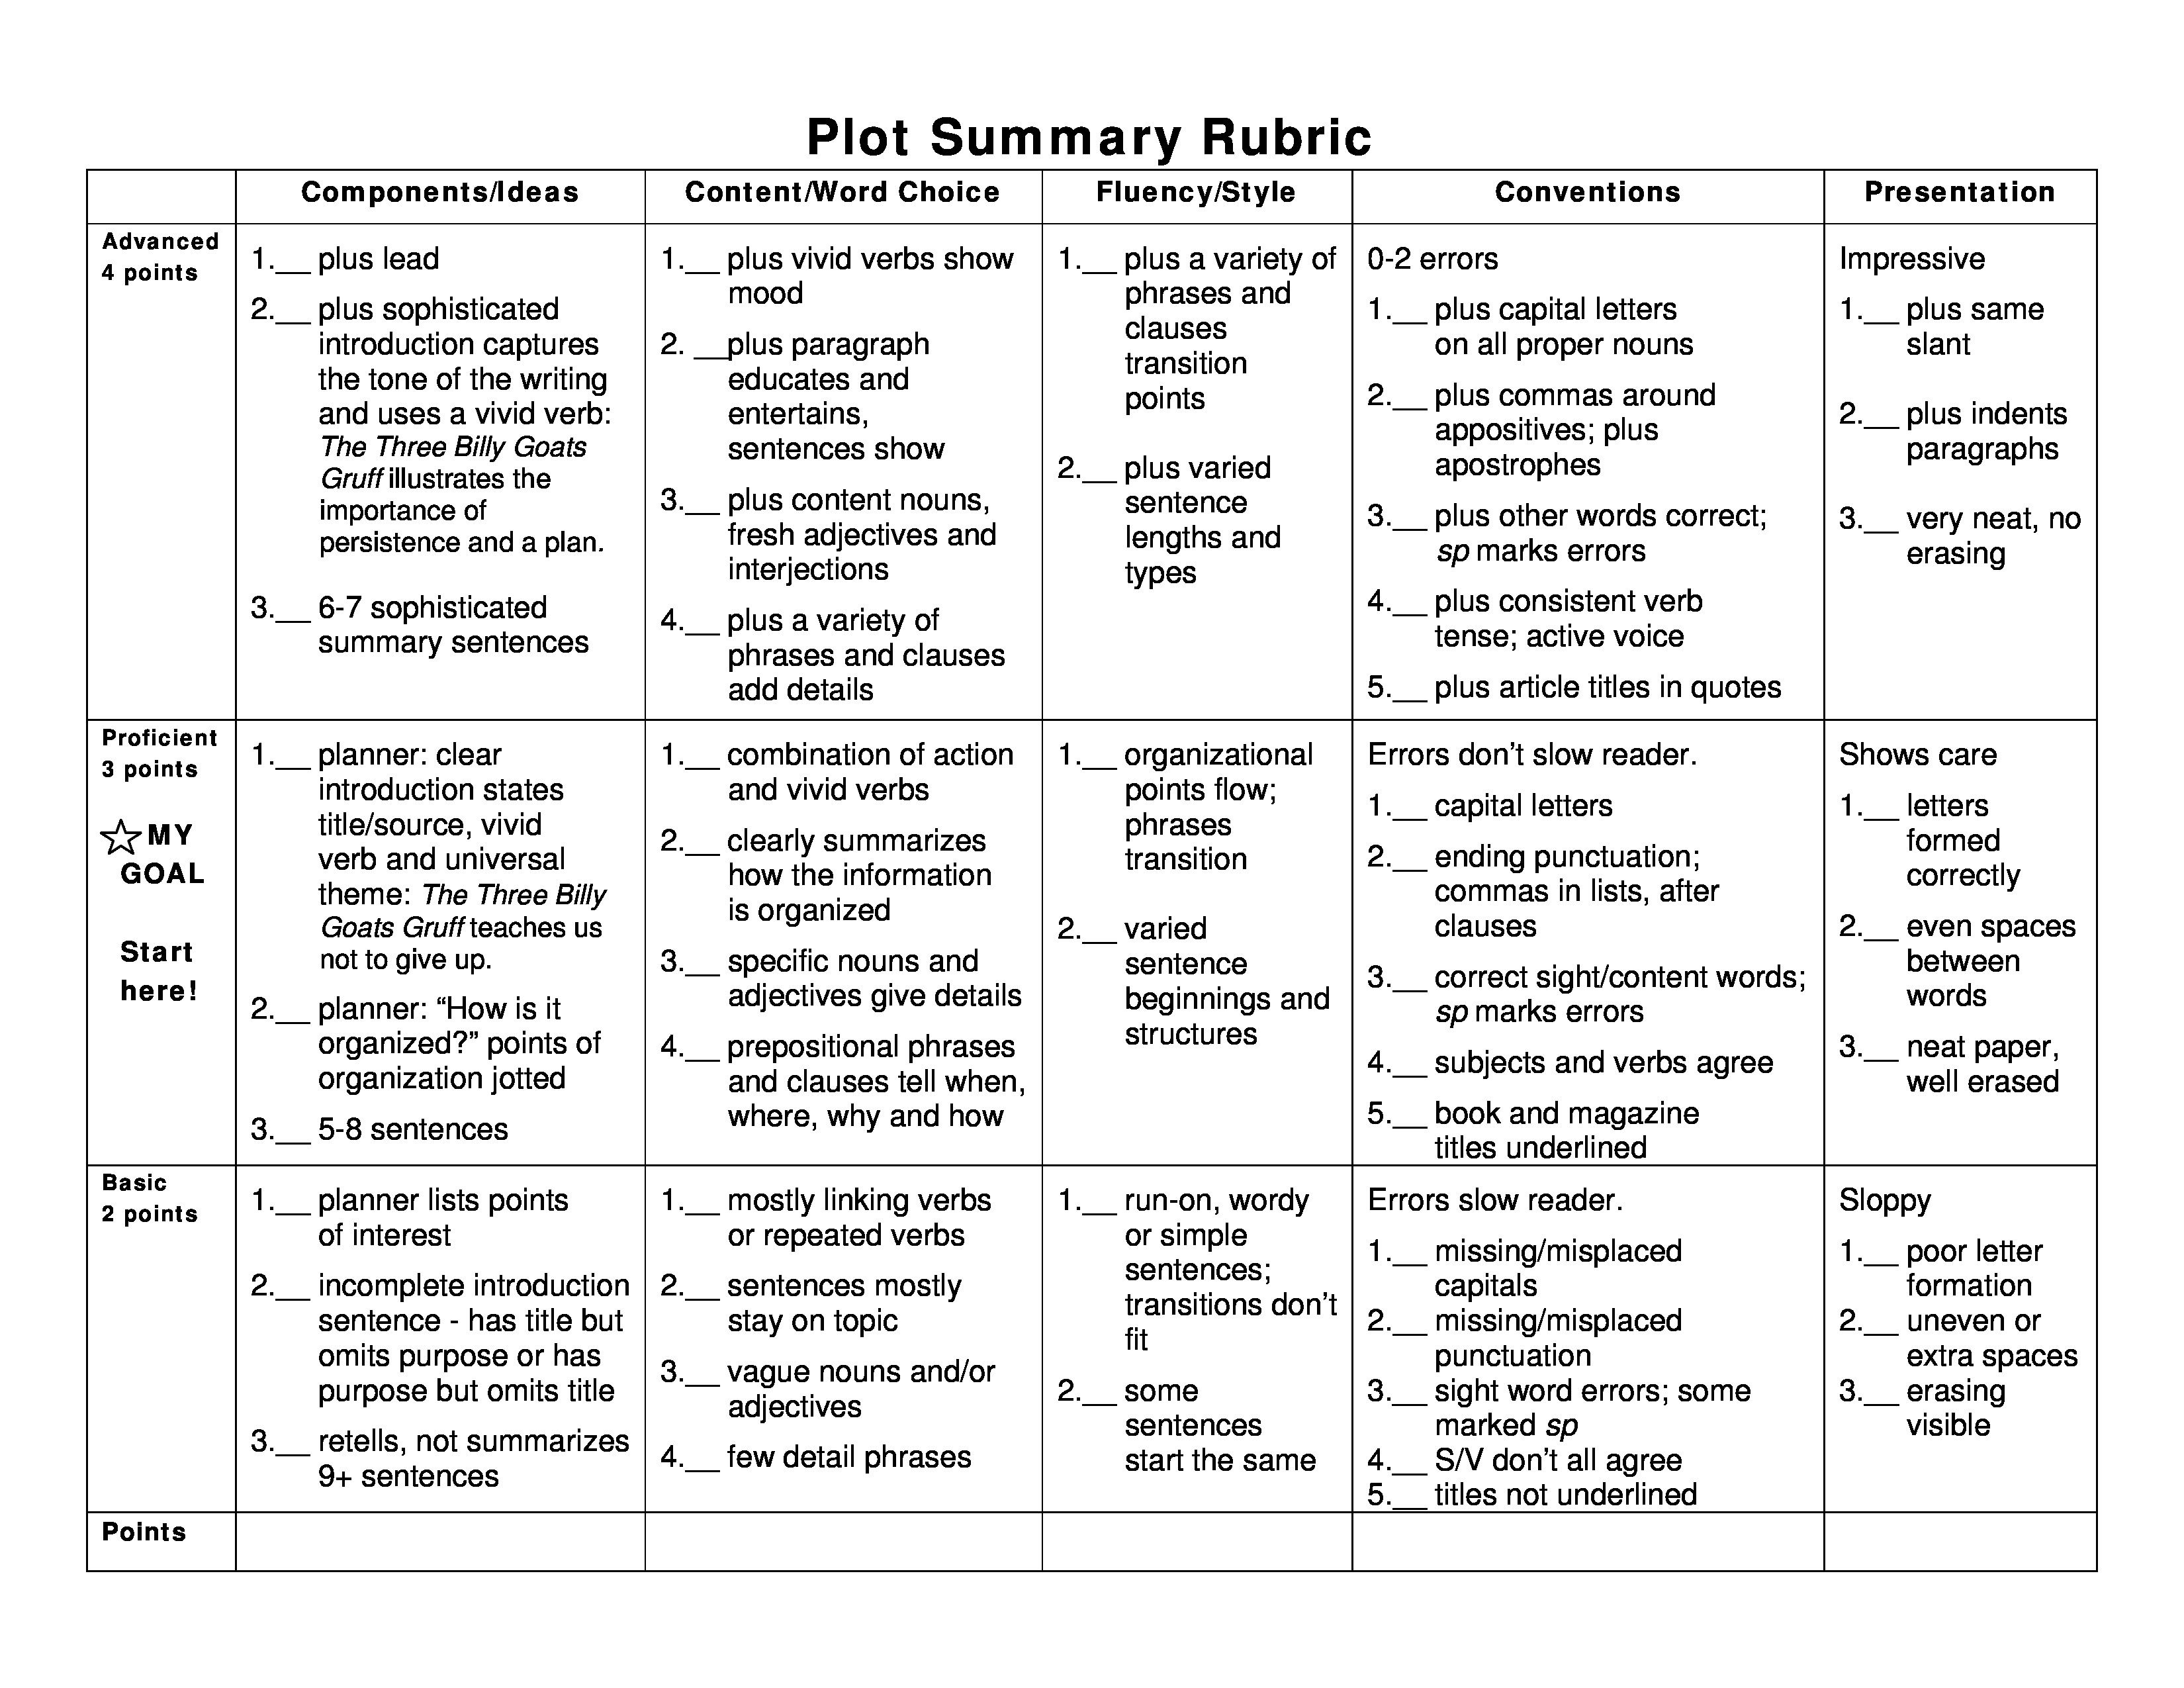 Rubric Plot Summary Rubric